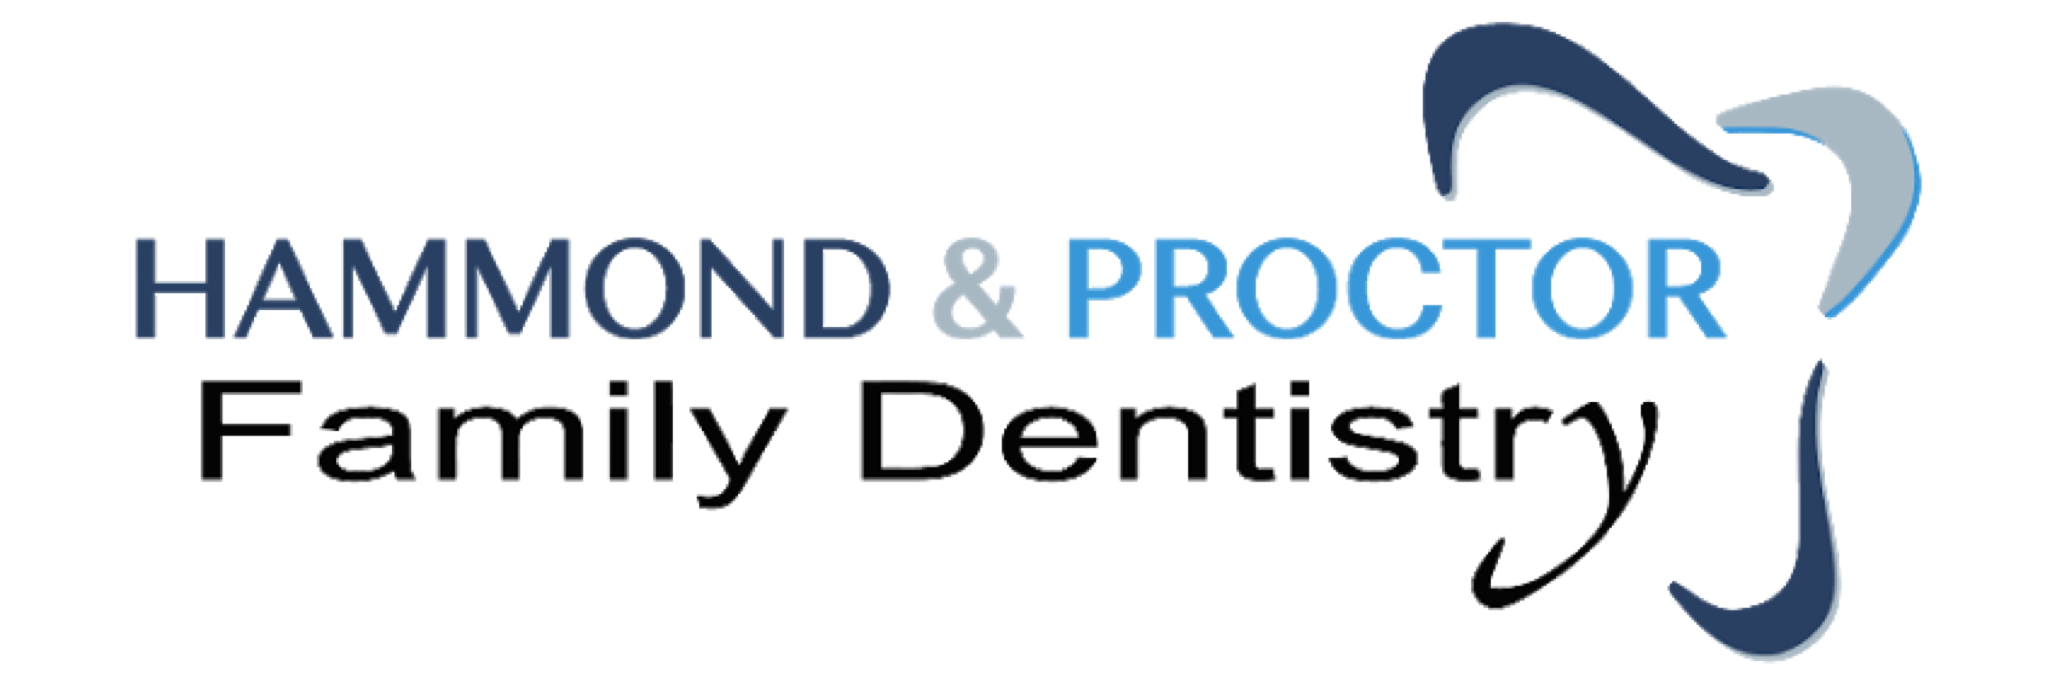 The company logo for Hammond & Proctor Family Dentistry